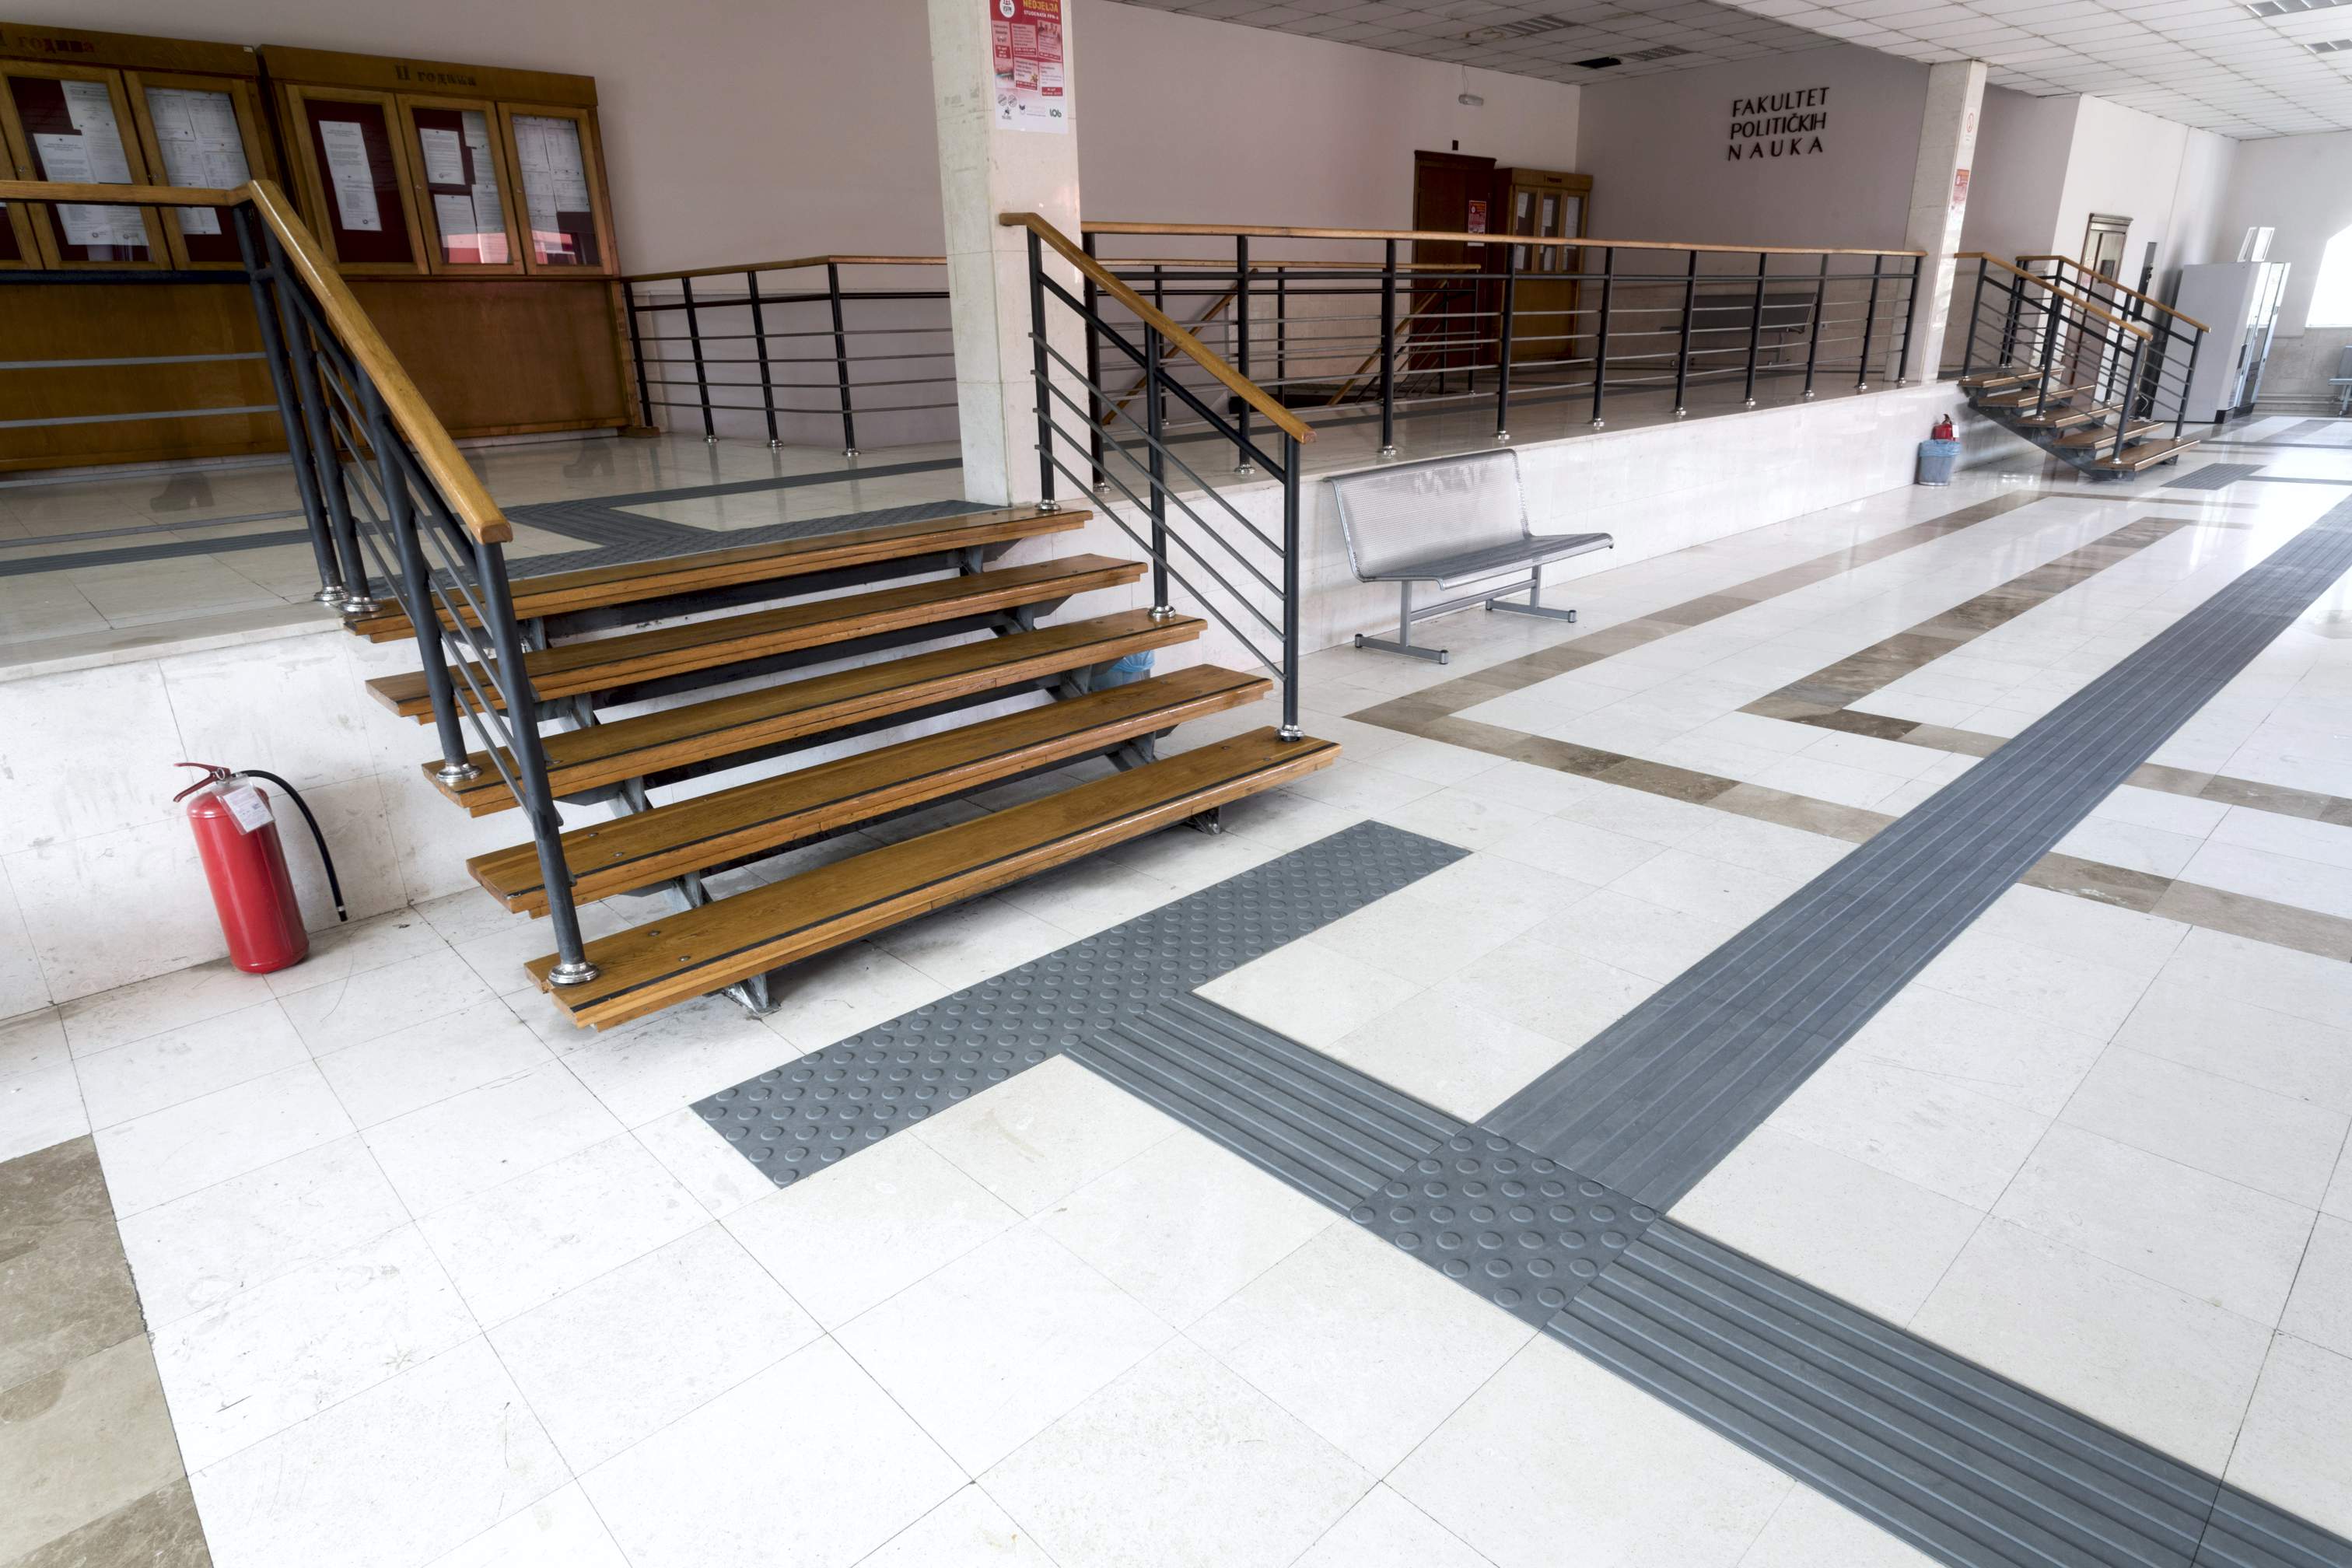 Tactile paths hallway